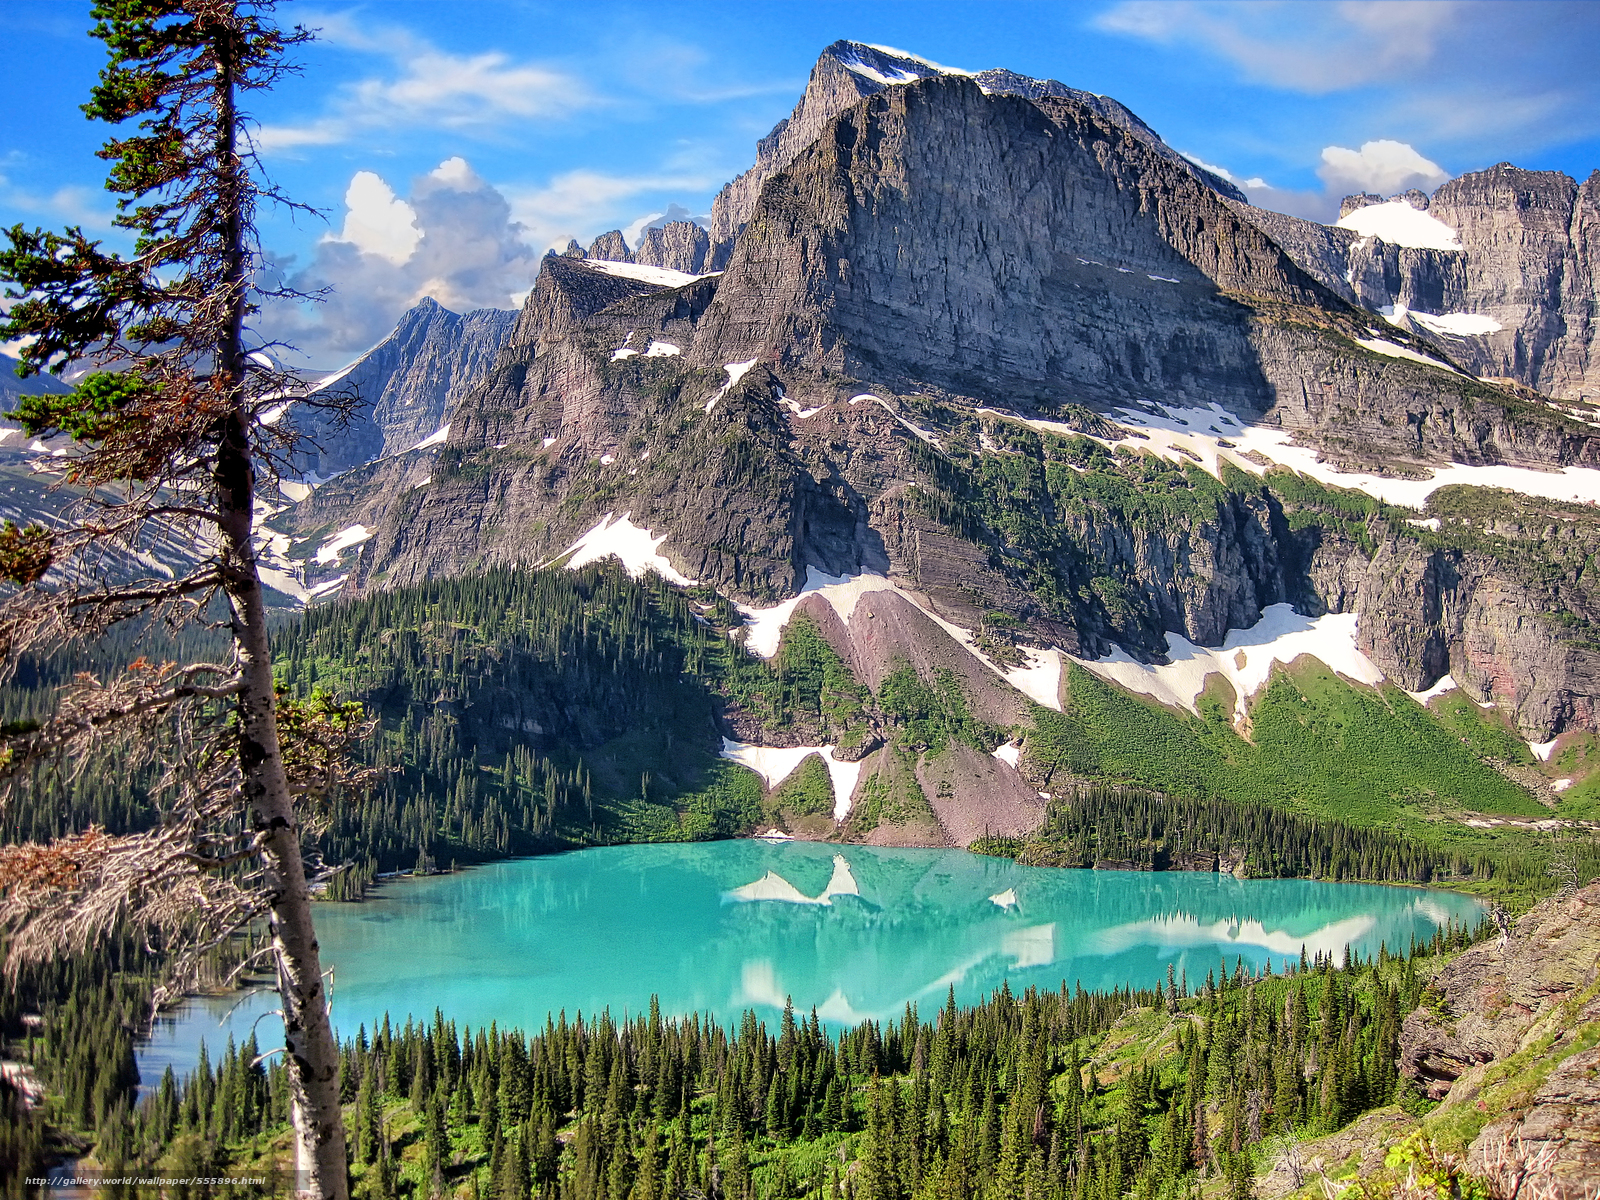 Download wallpaper Glacier National Park Mountains lake landscape